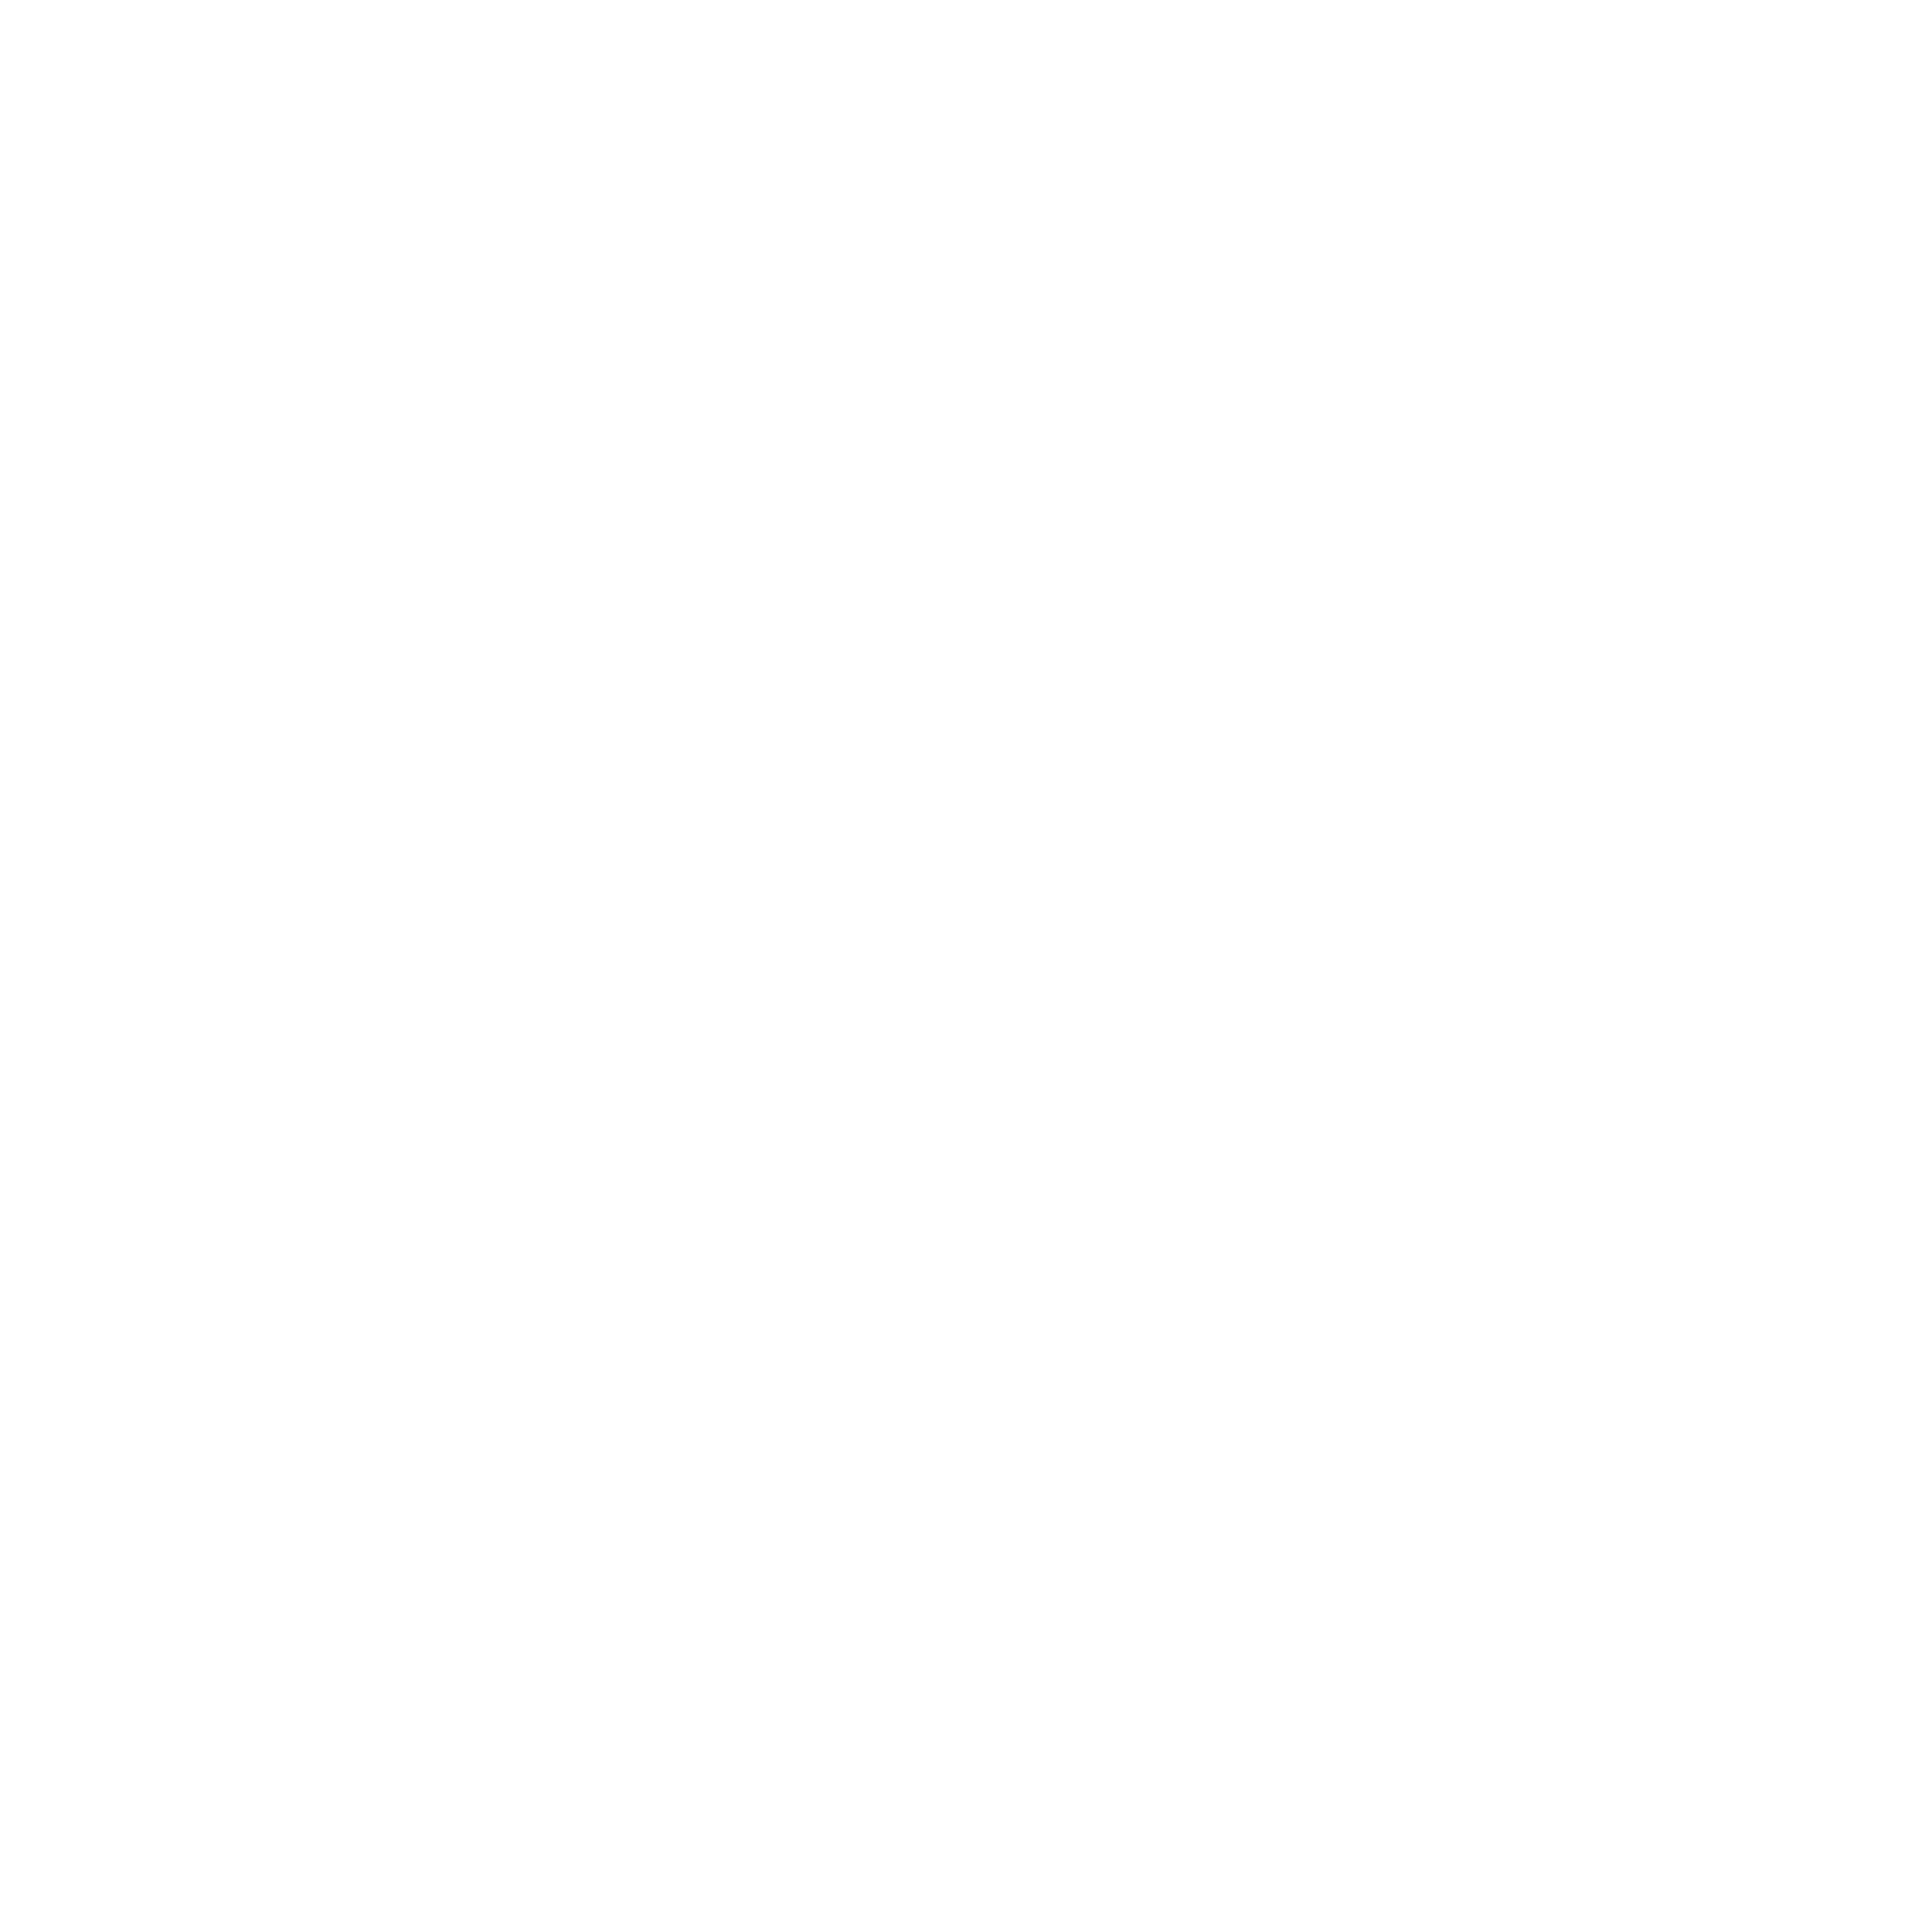 Inmarsat Logo - Inmarsat Logo PNG Transparent & SVG Vector